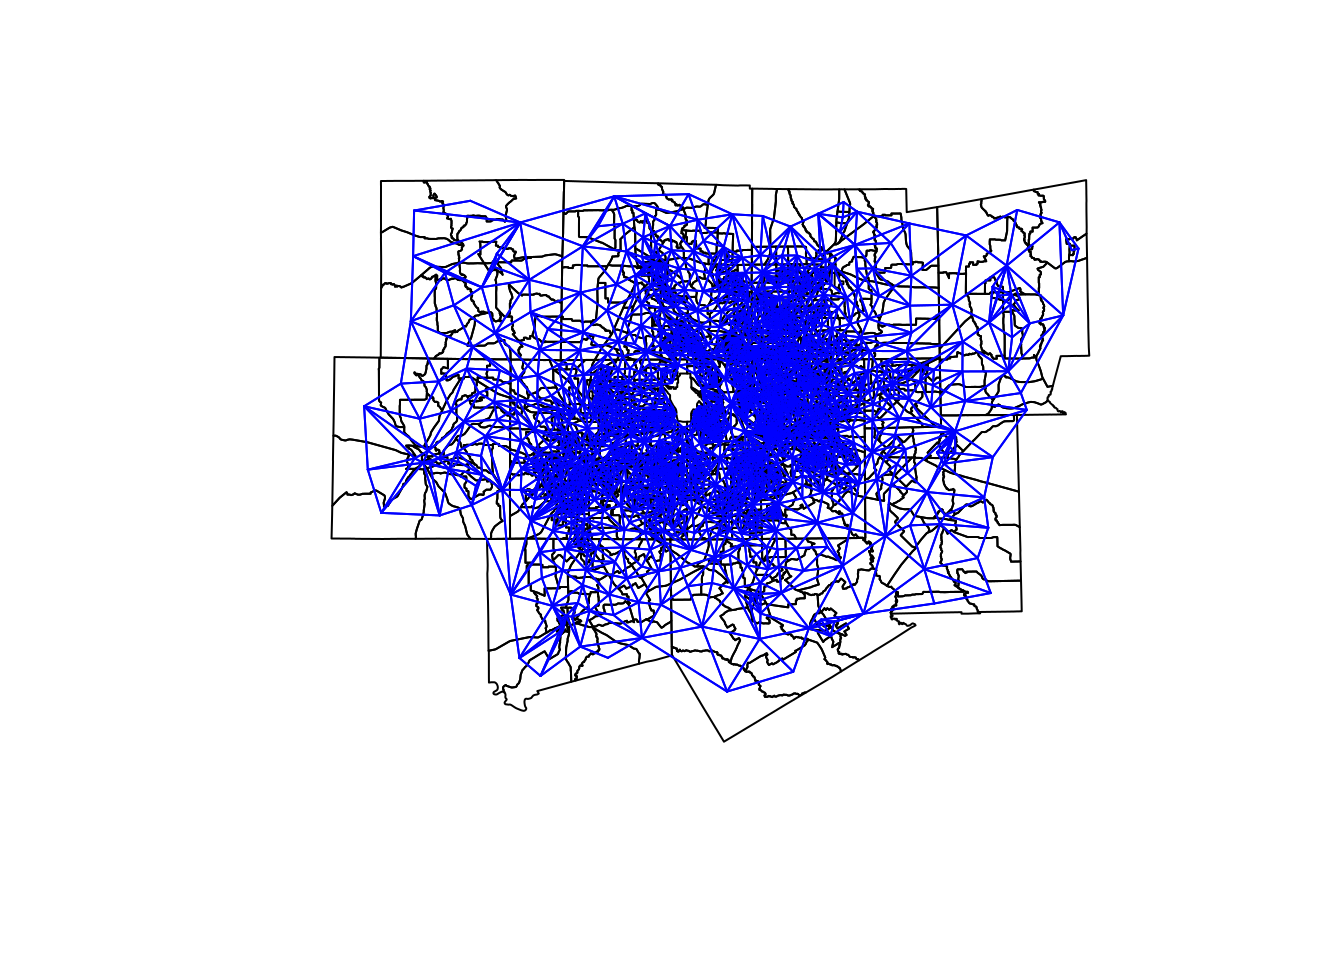 Visualization of queens-case neighborhood relationships